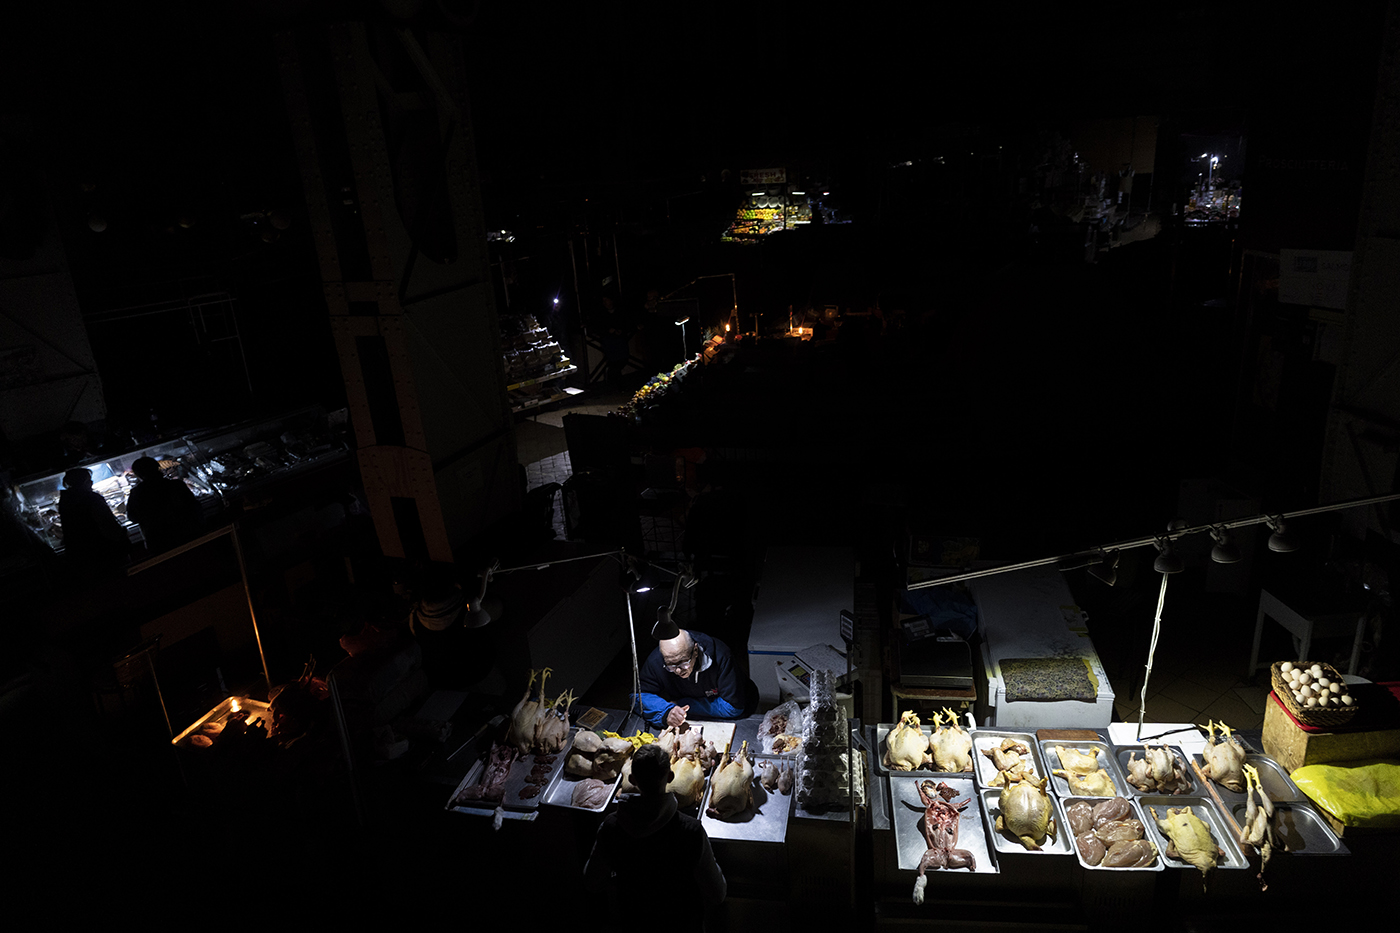 vendors in a market in the dark